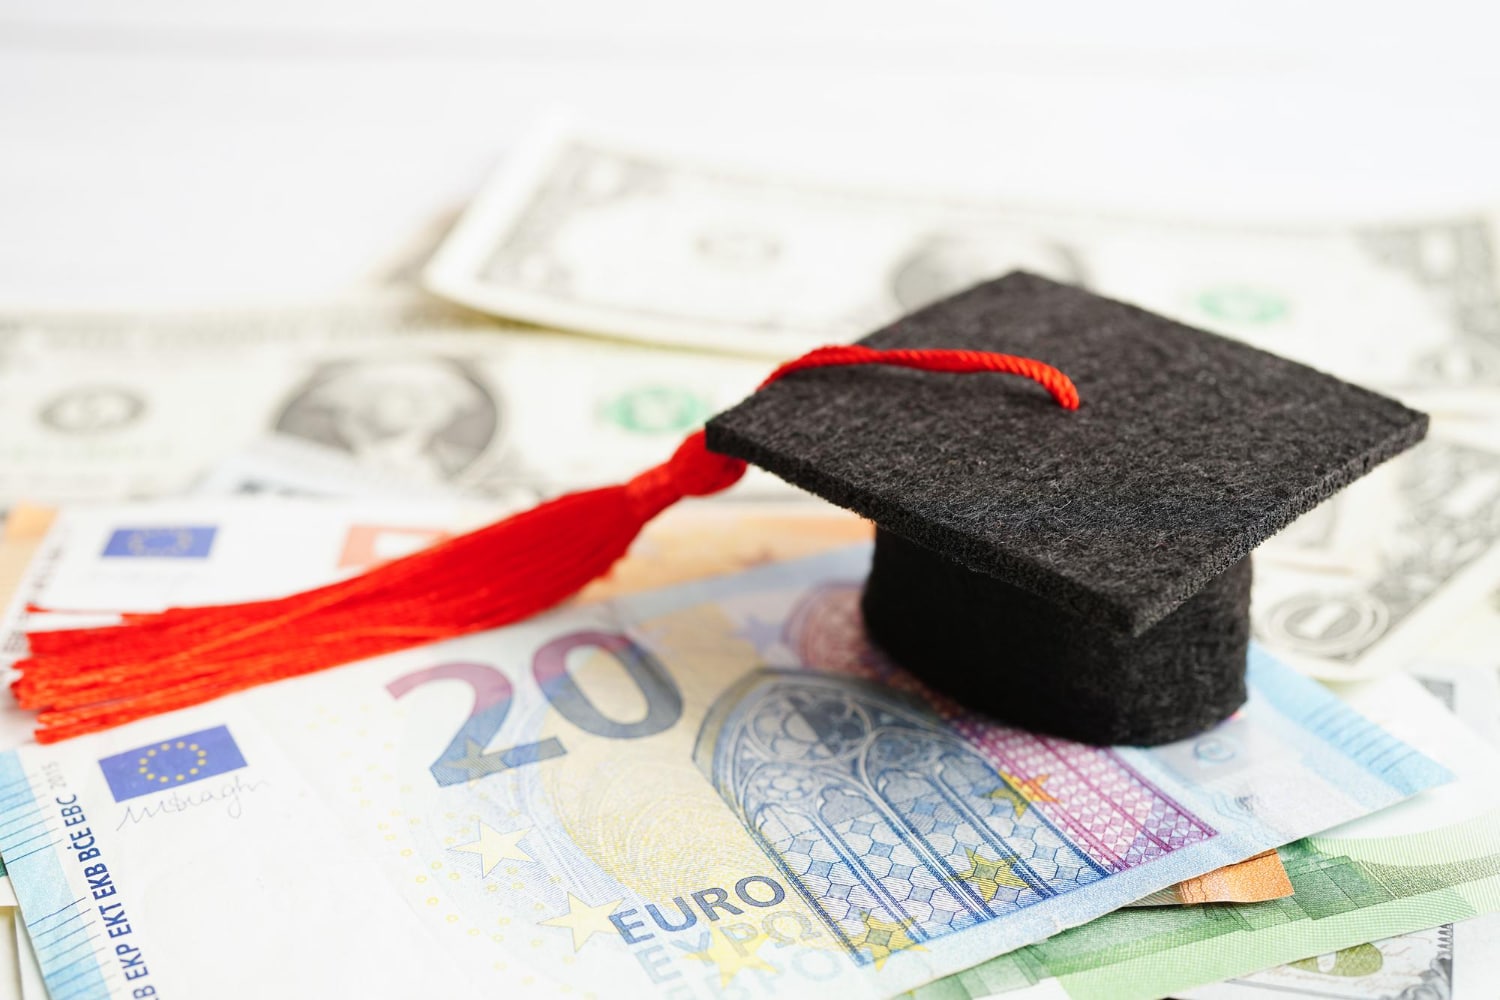 graduation gap hat euro us dollar banknotes money education study fee learning teach concept